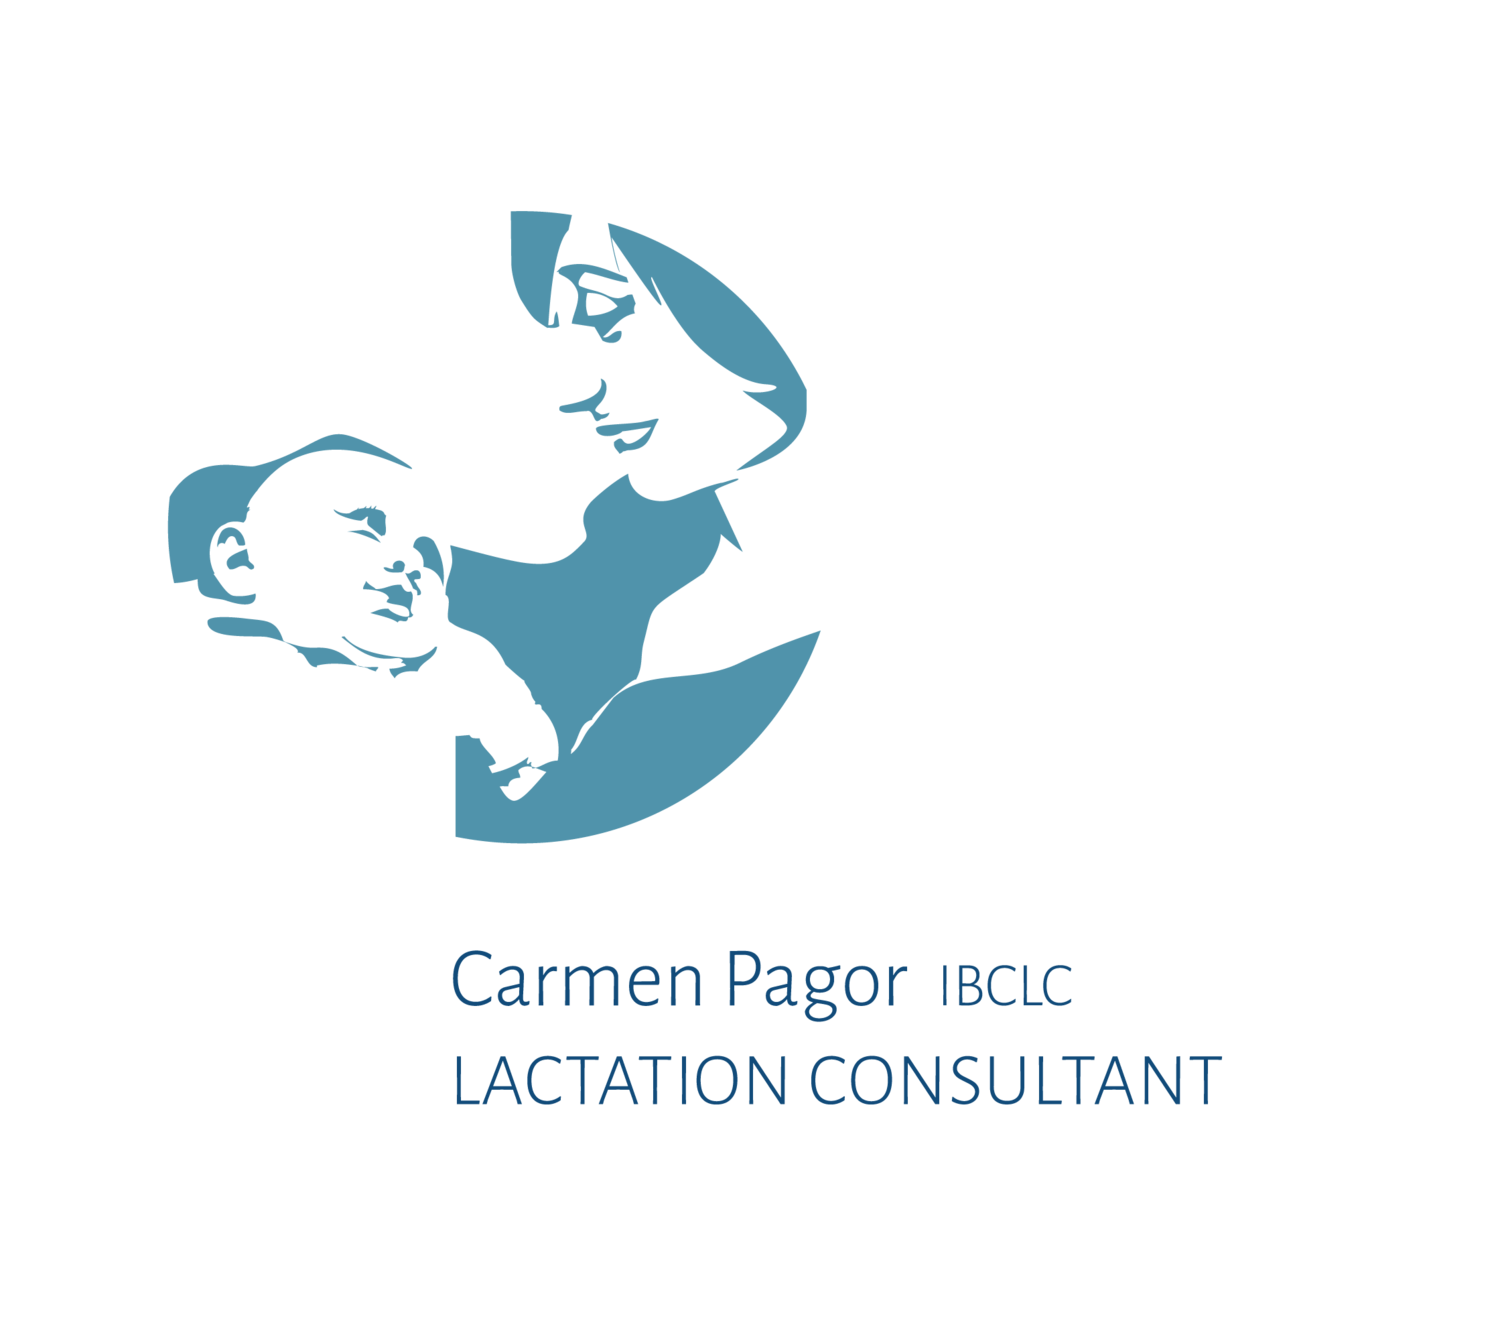 Carmen Pagor lactation consultant IBCLC